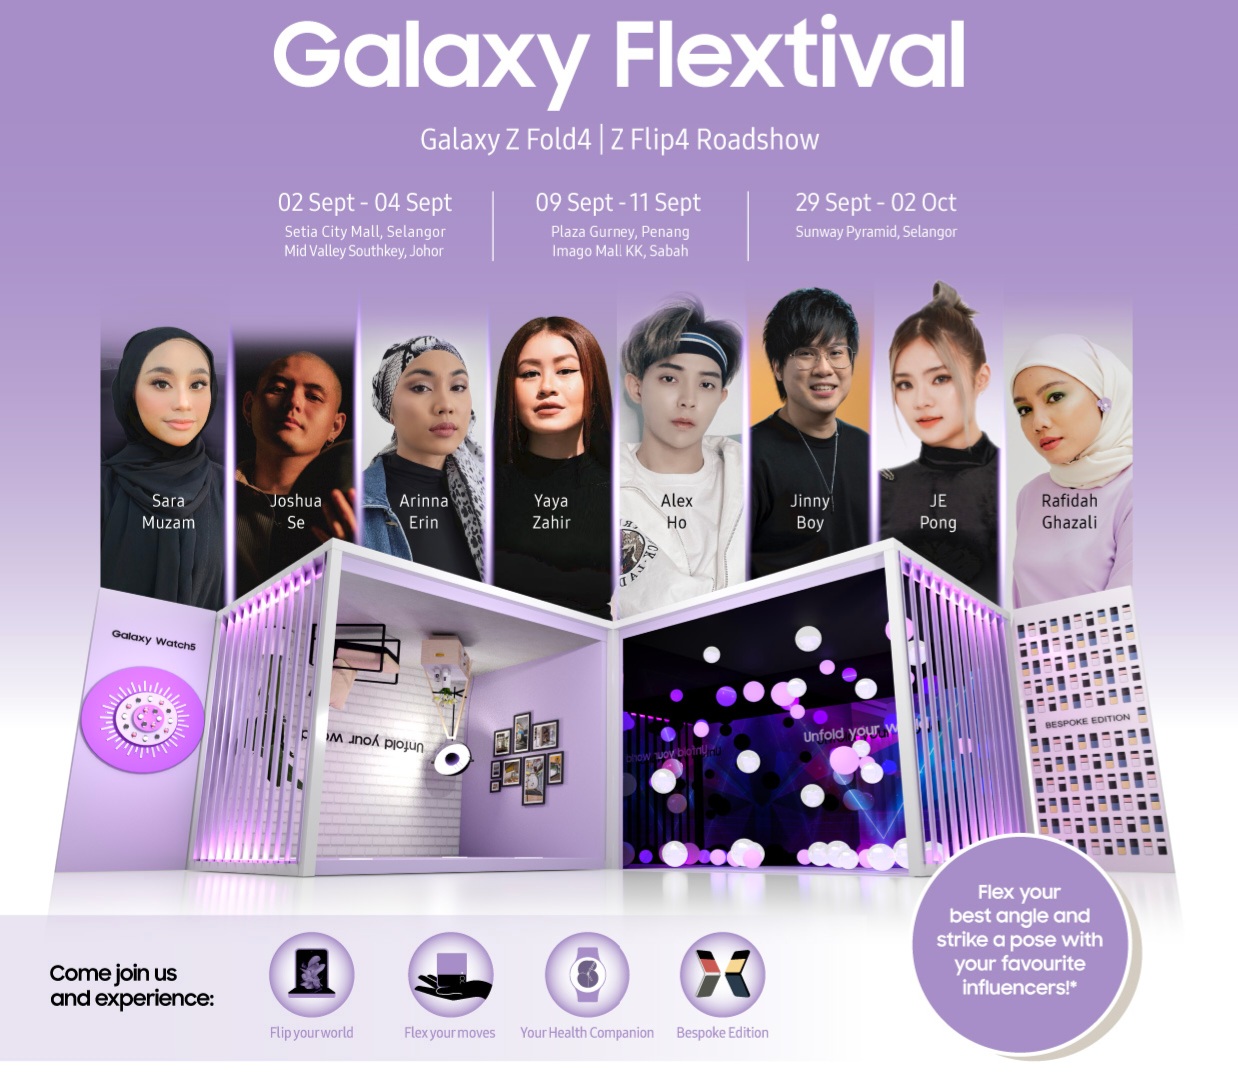 Kunjungi roadshow Samsung Galaxy Flextival - tawaran hebat kalau beli Galaxy Z Fold4 atau Z Flip4 7